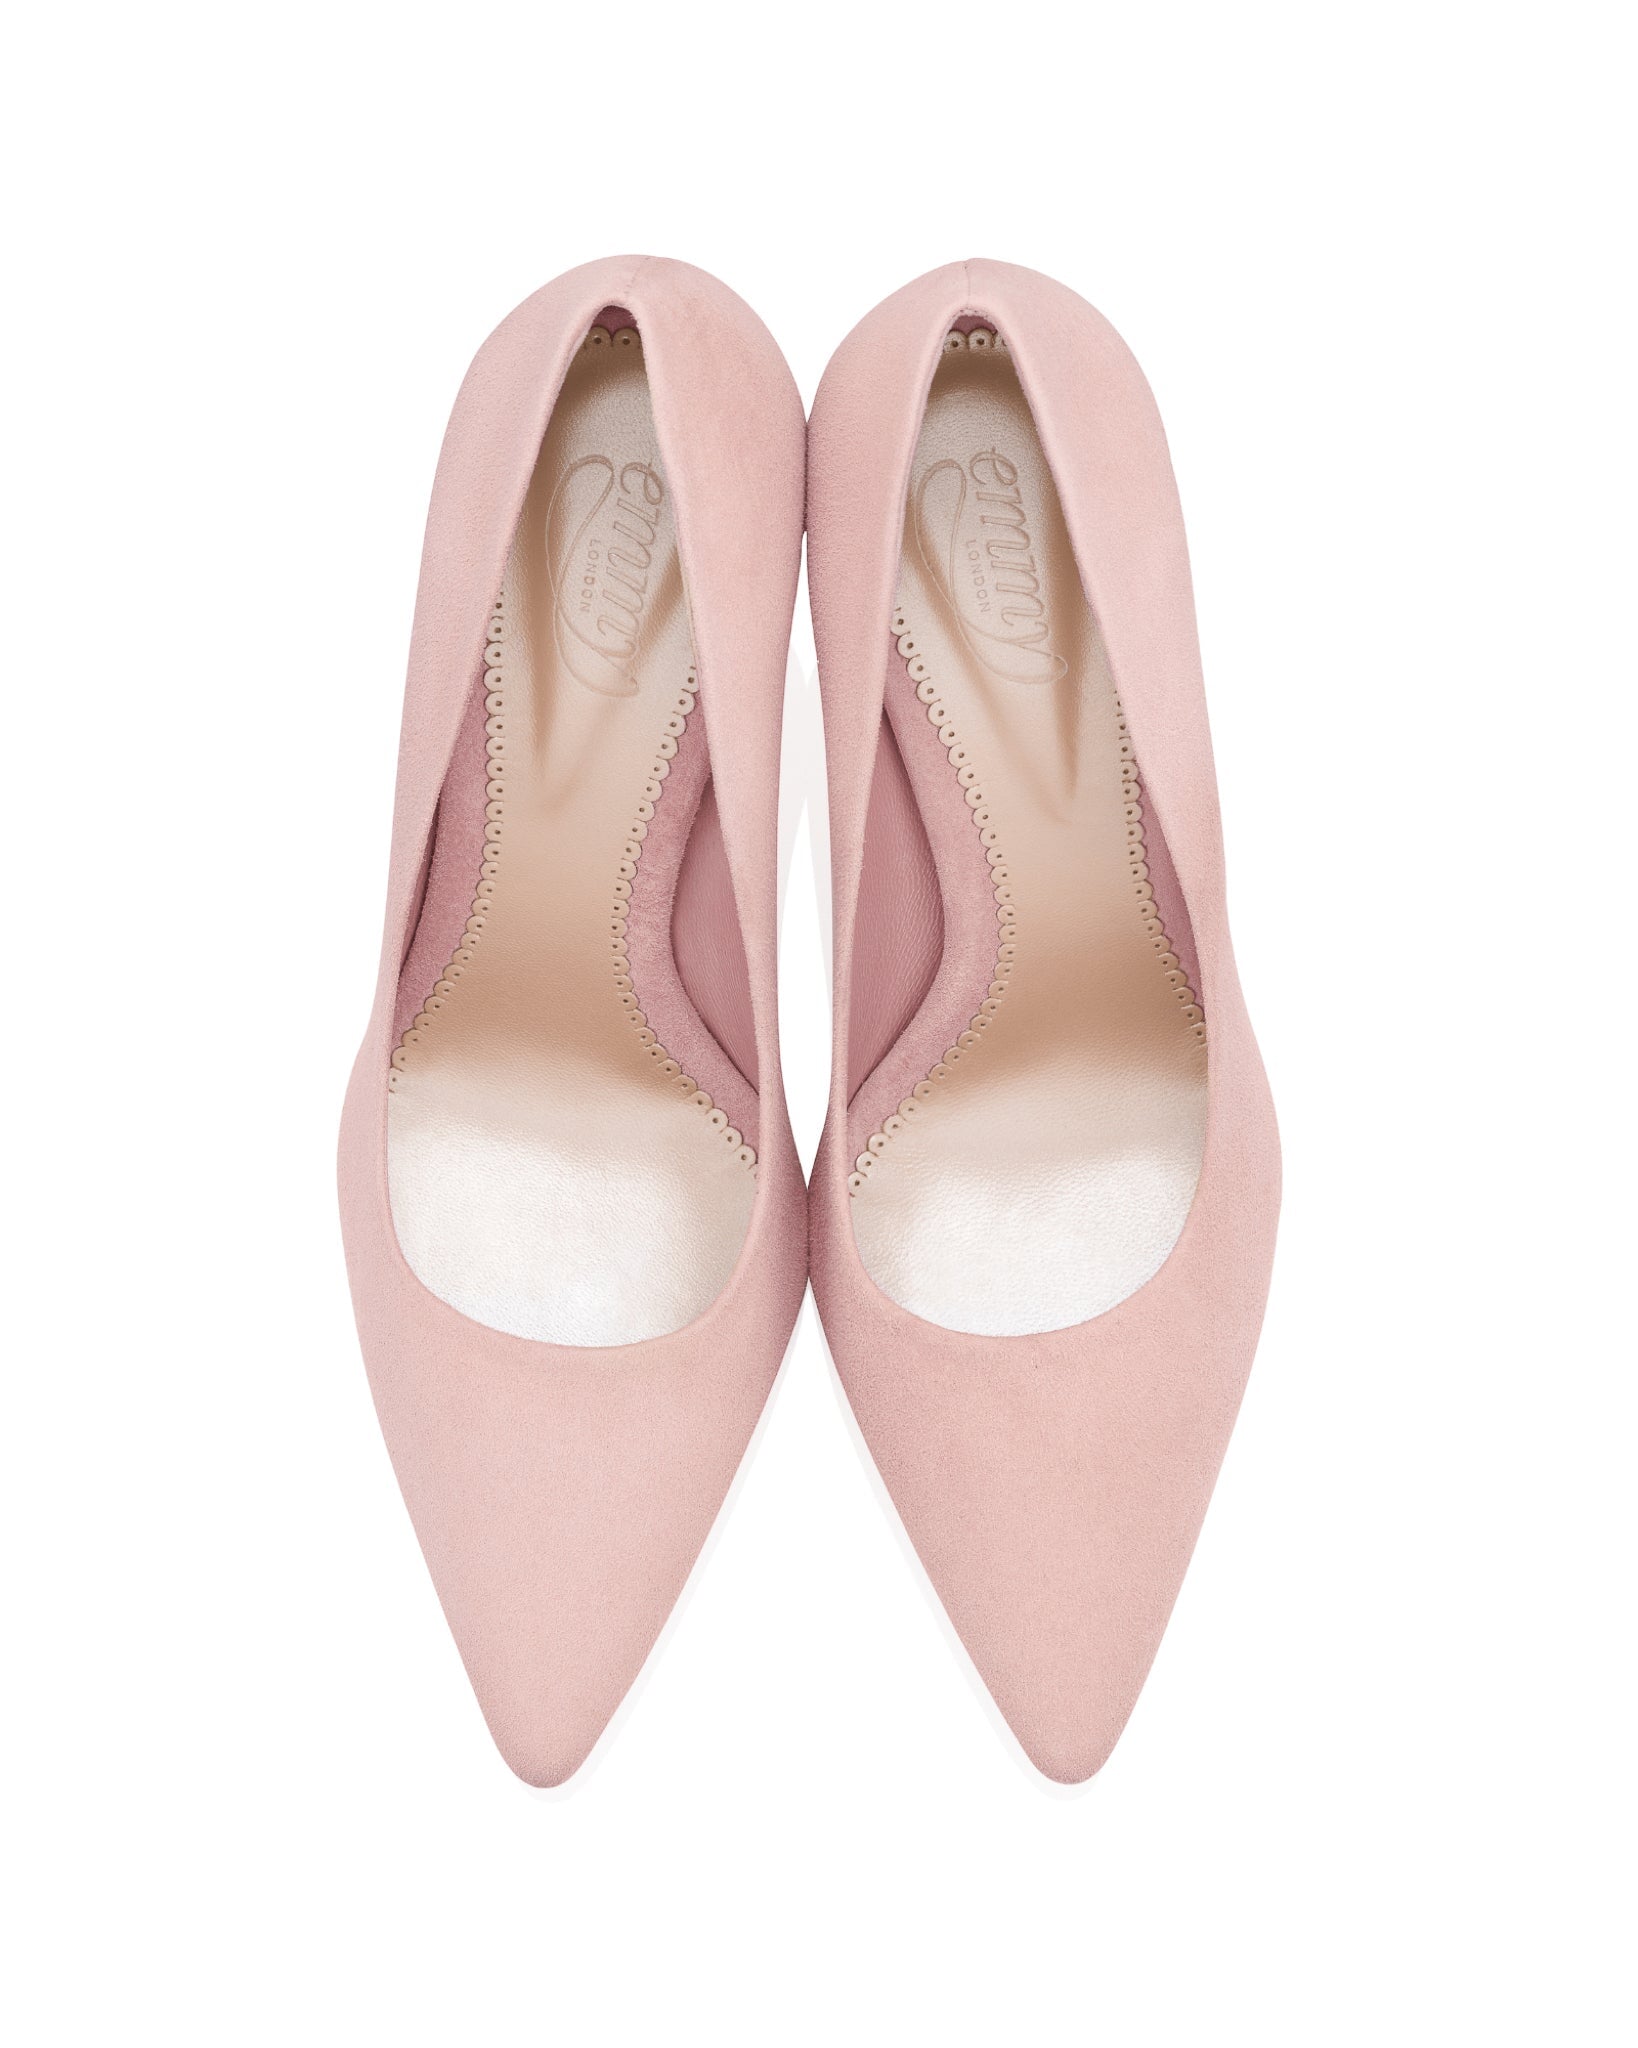 Claudia Mid Heel Fashion Shoe Pink Court Shoe  image